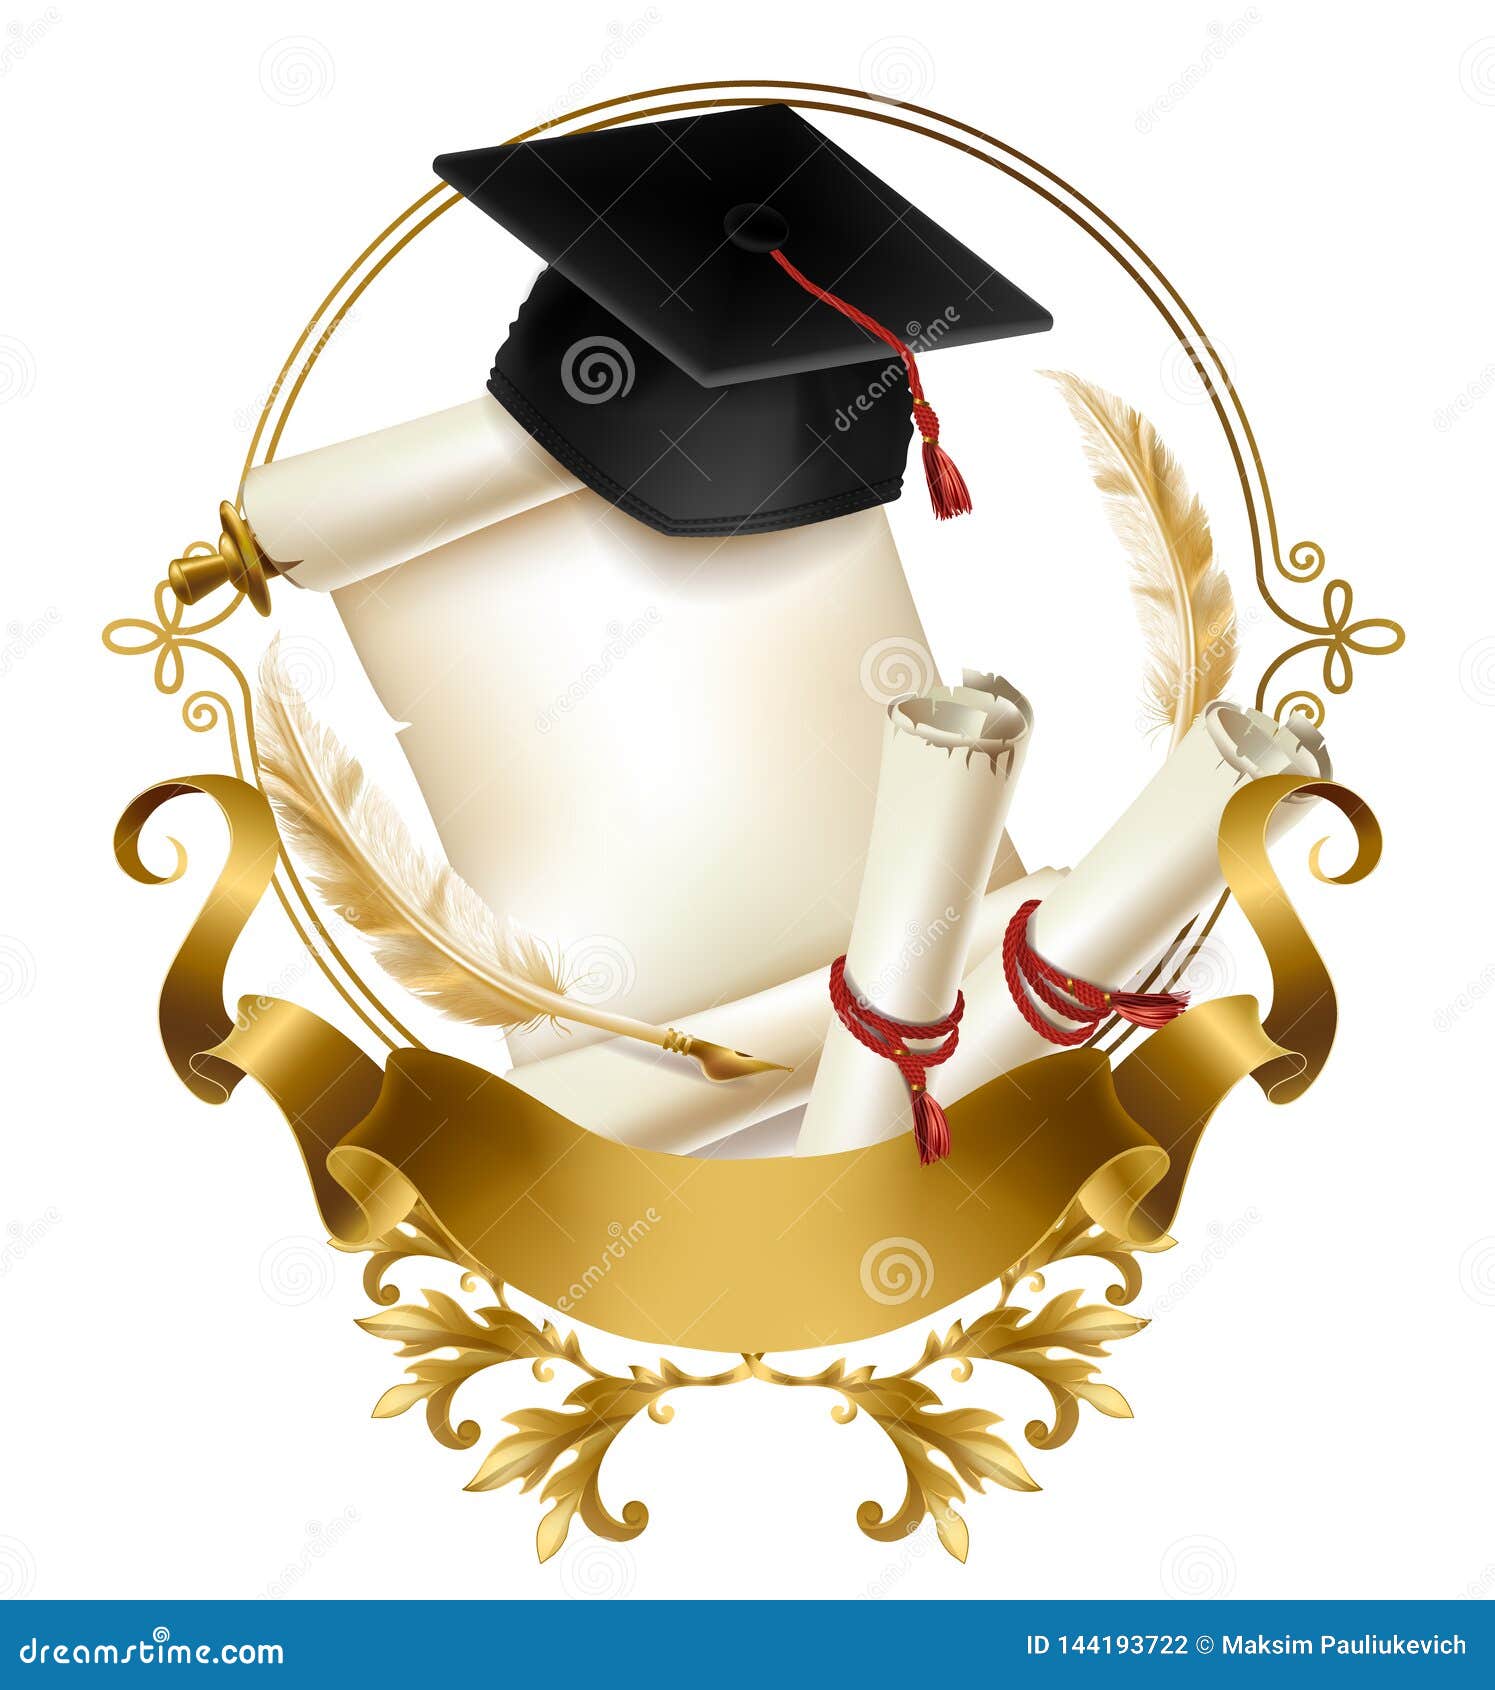 Graduation Diploma Or Certificate Realistic Vector Stock Vector